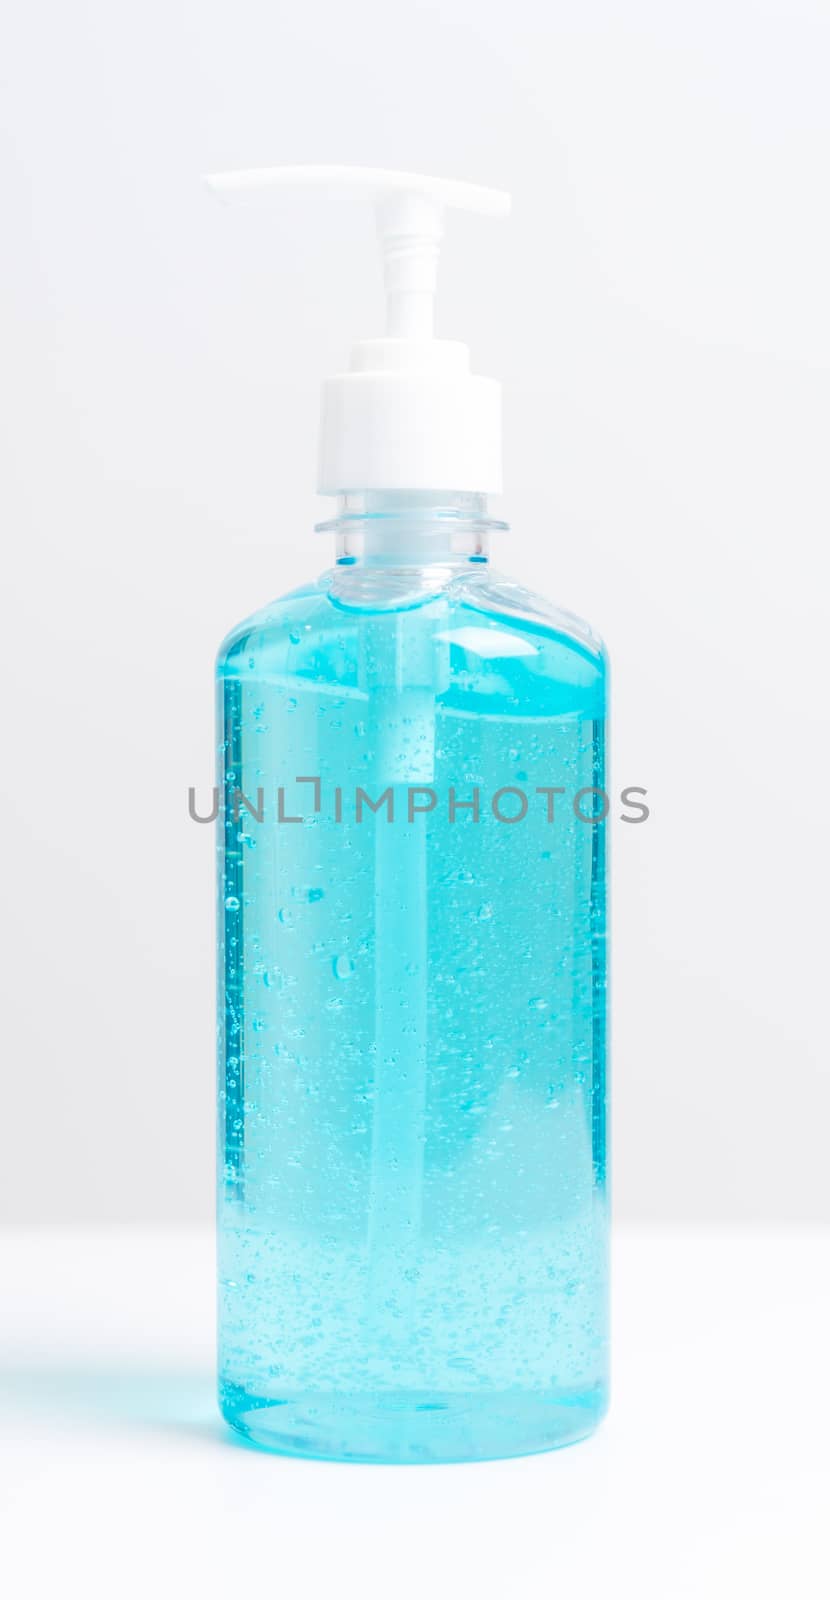 alcohol gel pump for washing hand by Sorapop